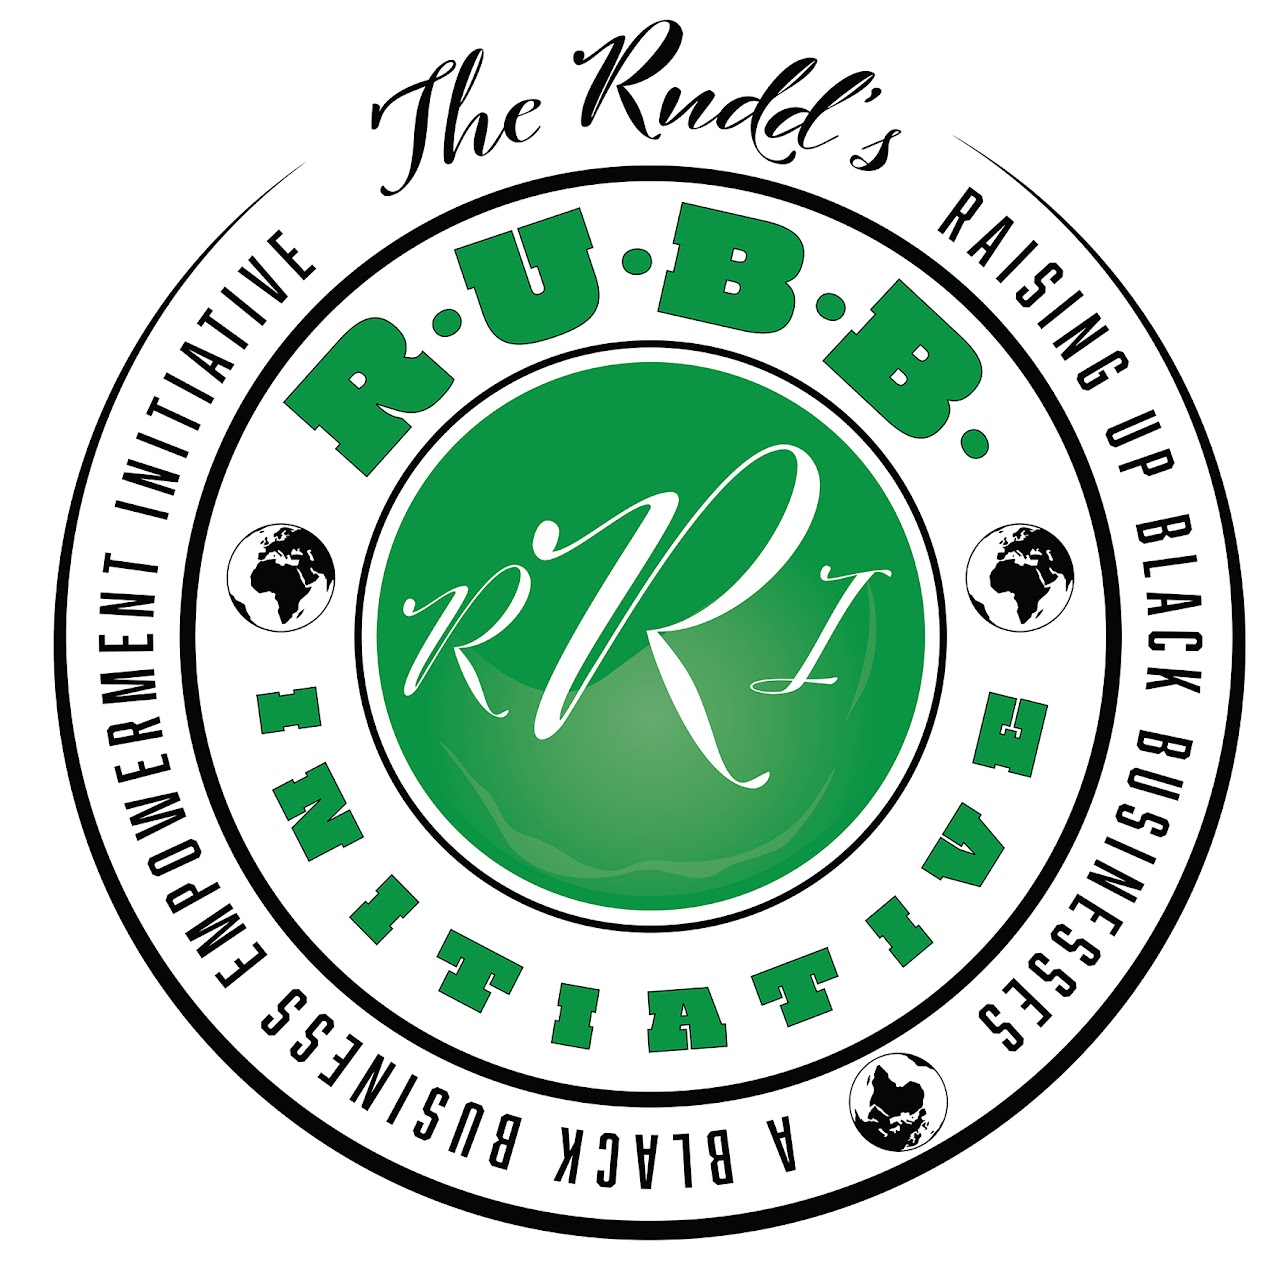 The Rudd's R.U.B.B. Initiative logo